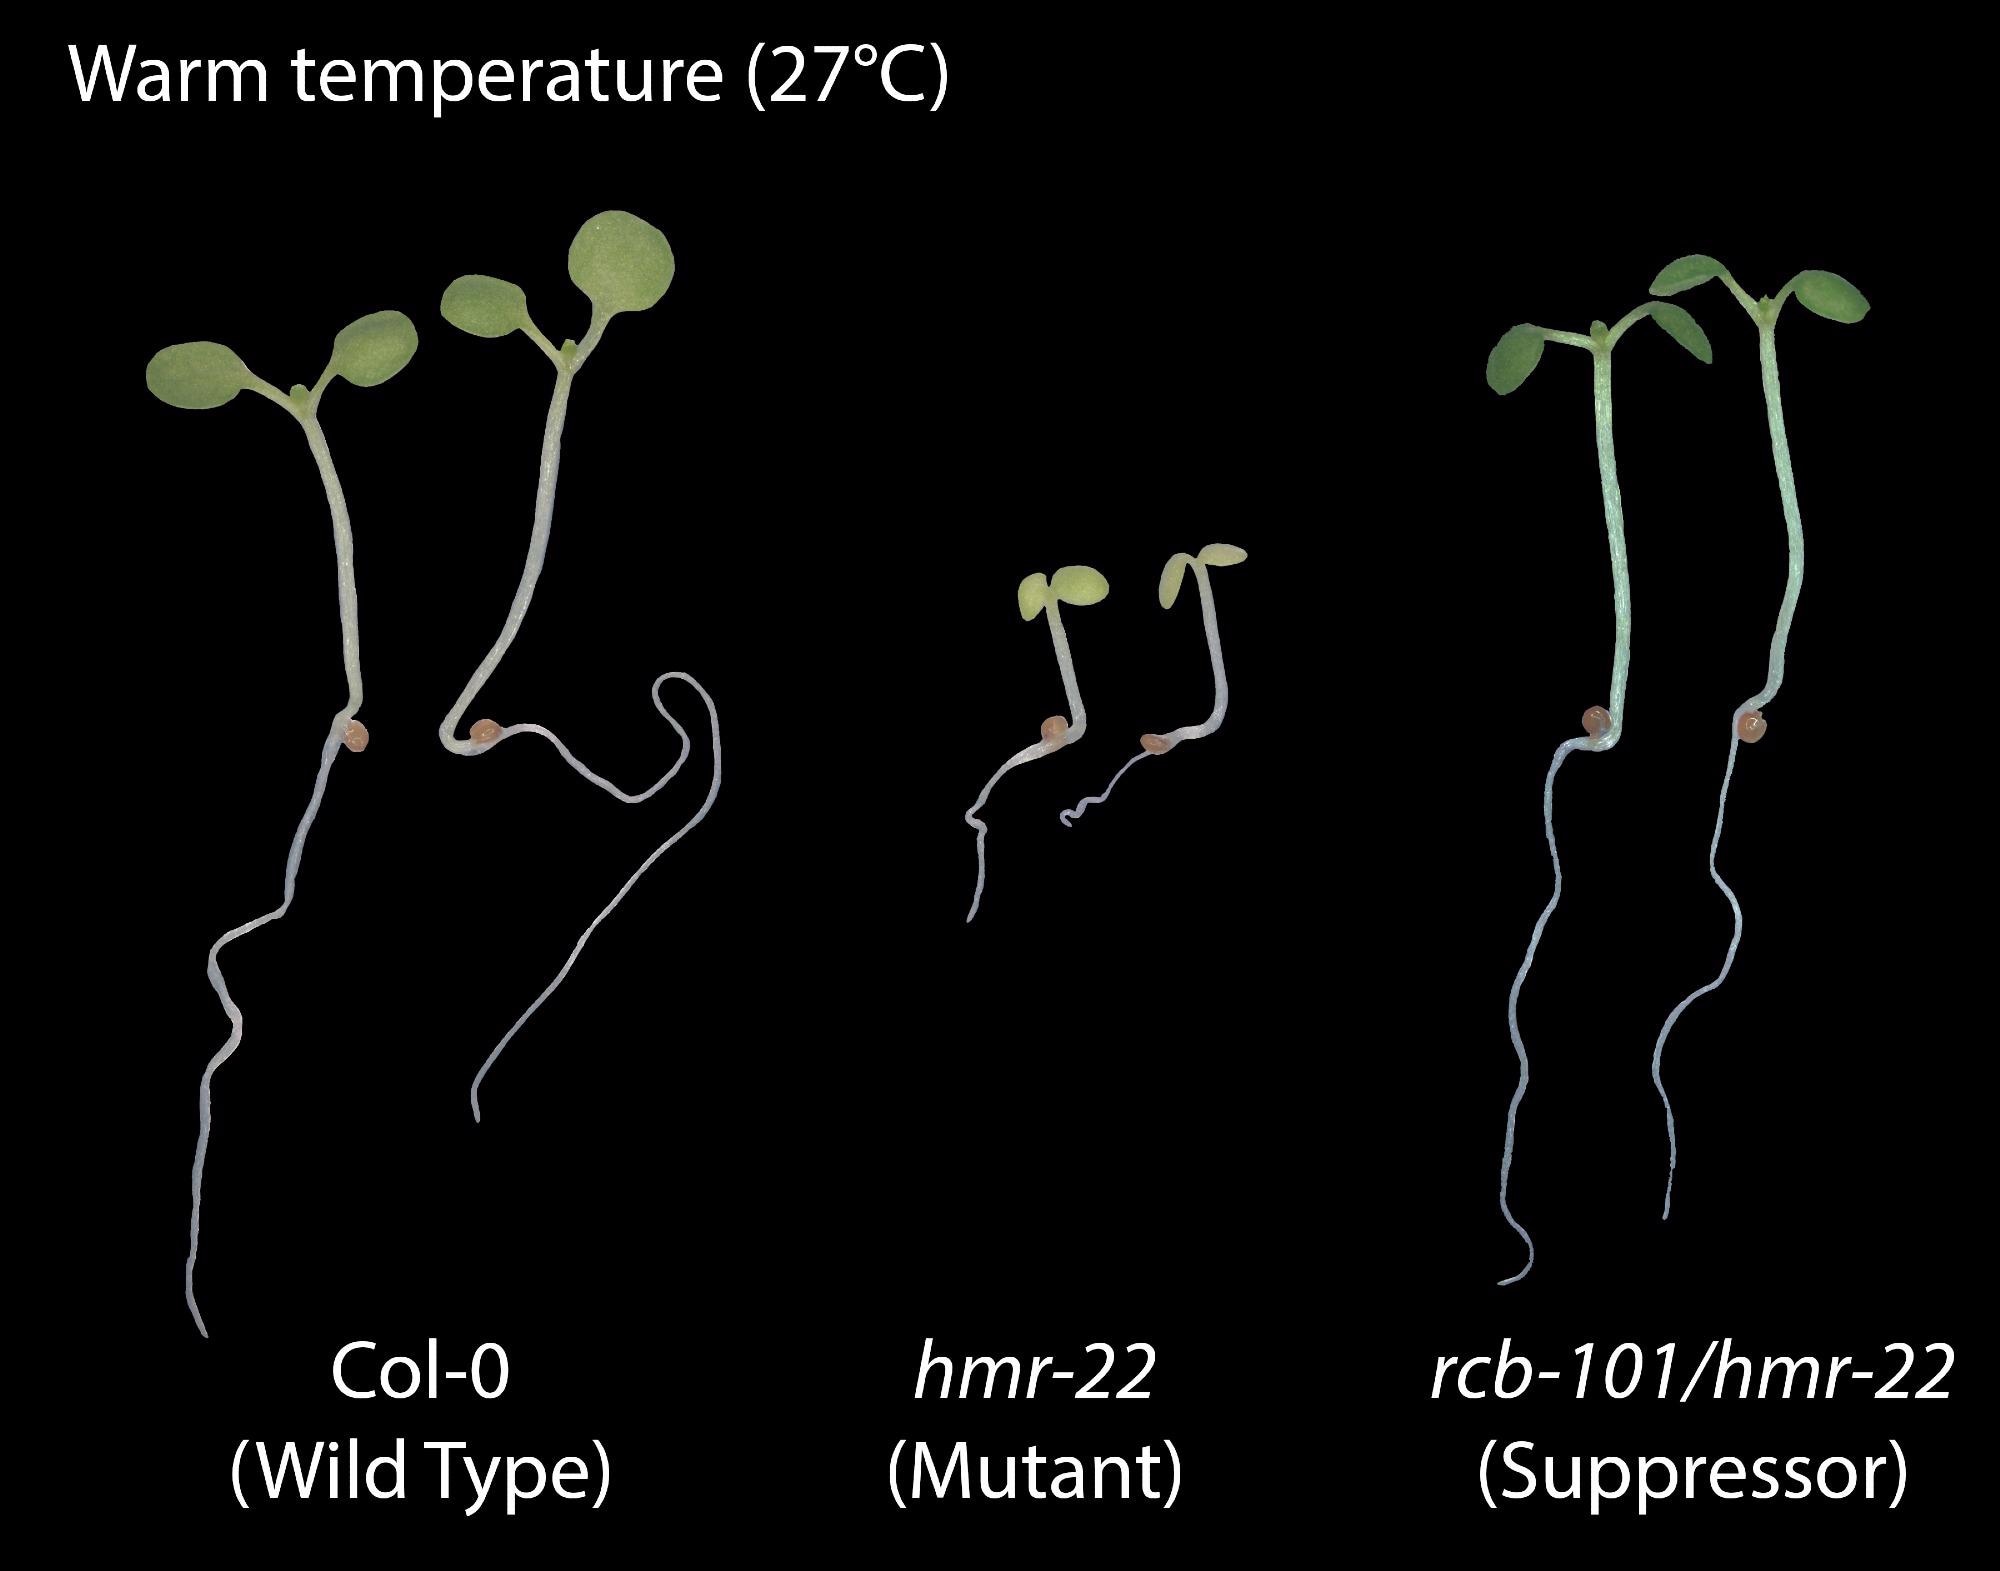 Drastic differences in mutant Arabidopsis seedlings grown at warm temperatures.